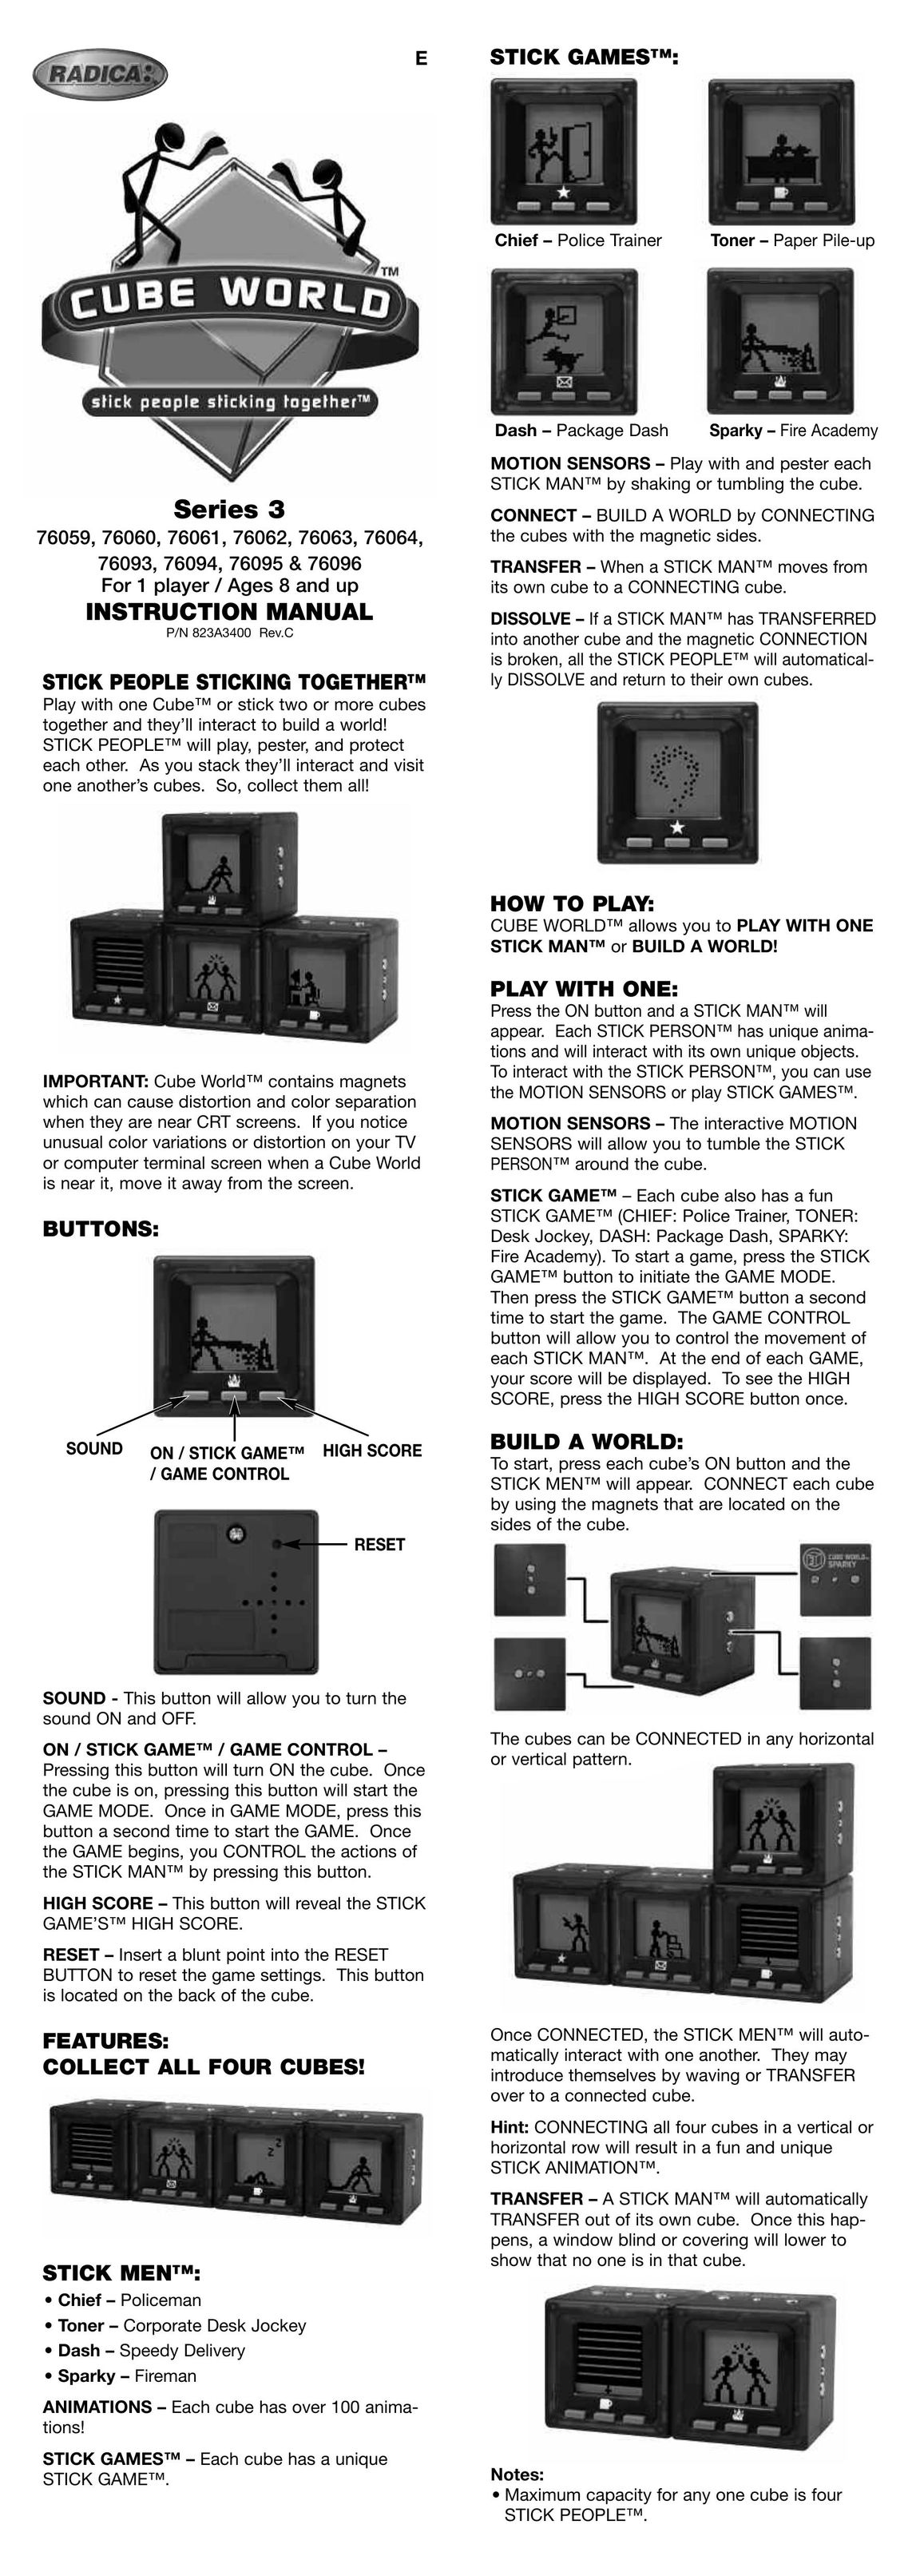 Radica Games 76096 Handheld Game System User Manual